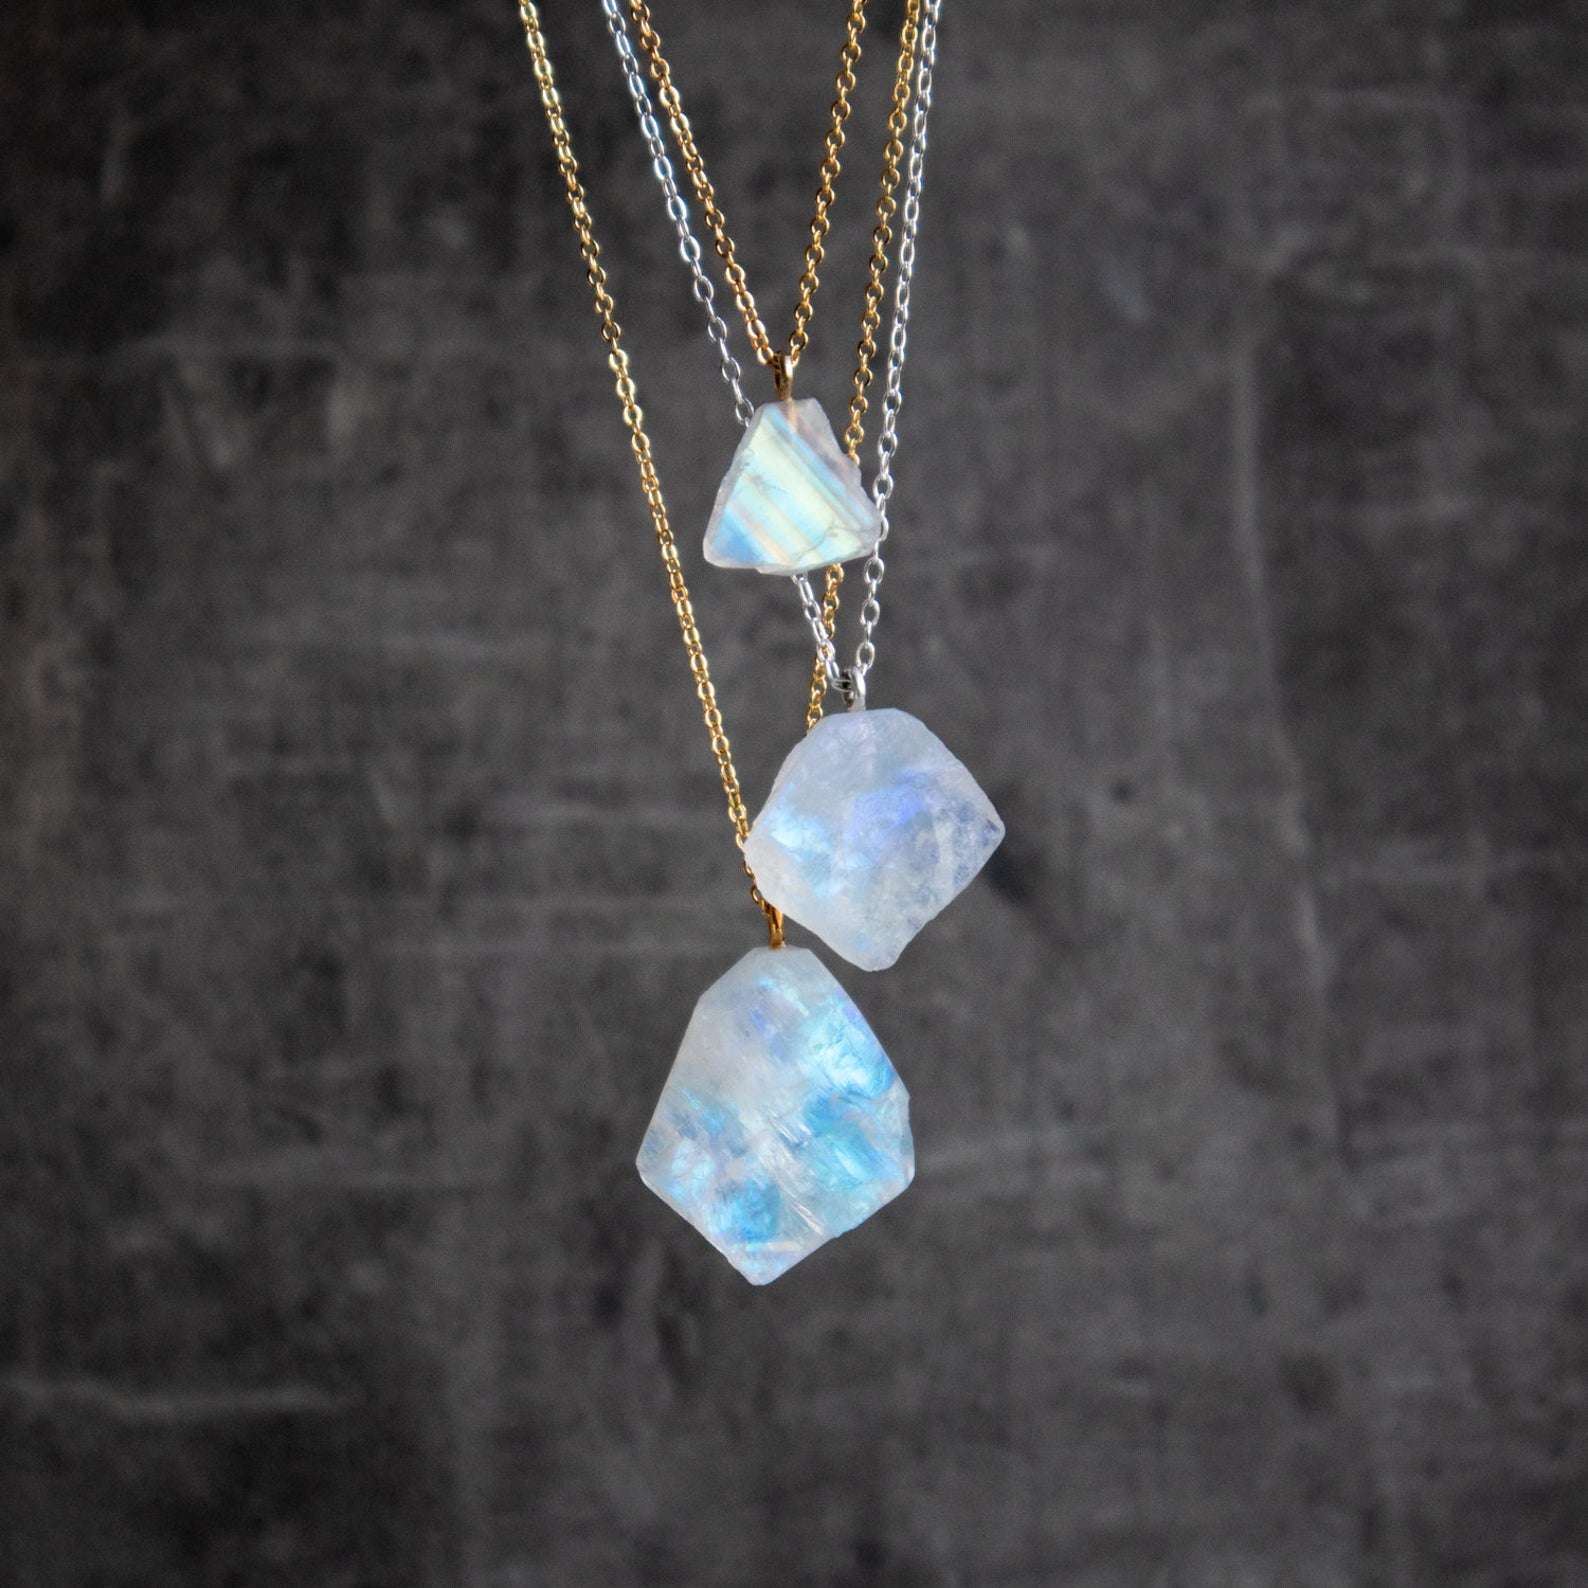 Natural Moonstone Healing Crystal Gem Necklace Wand Pendant- | eBay